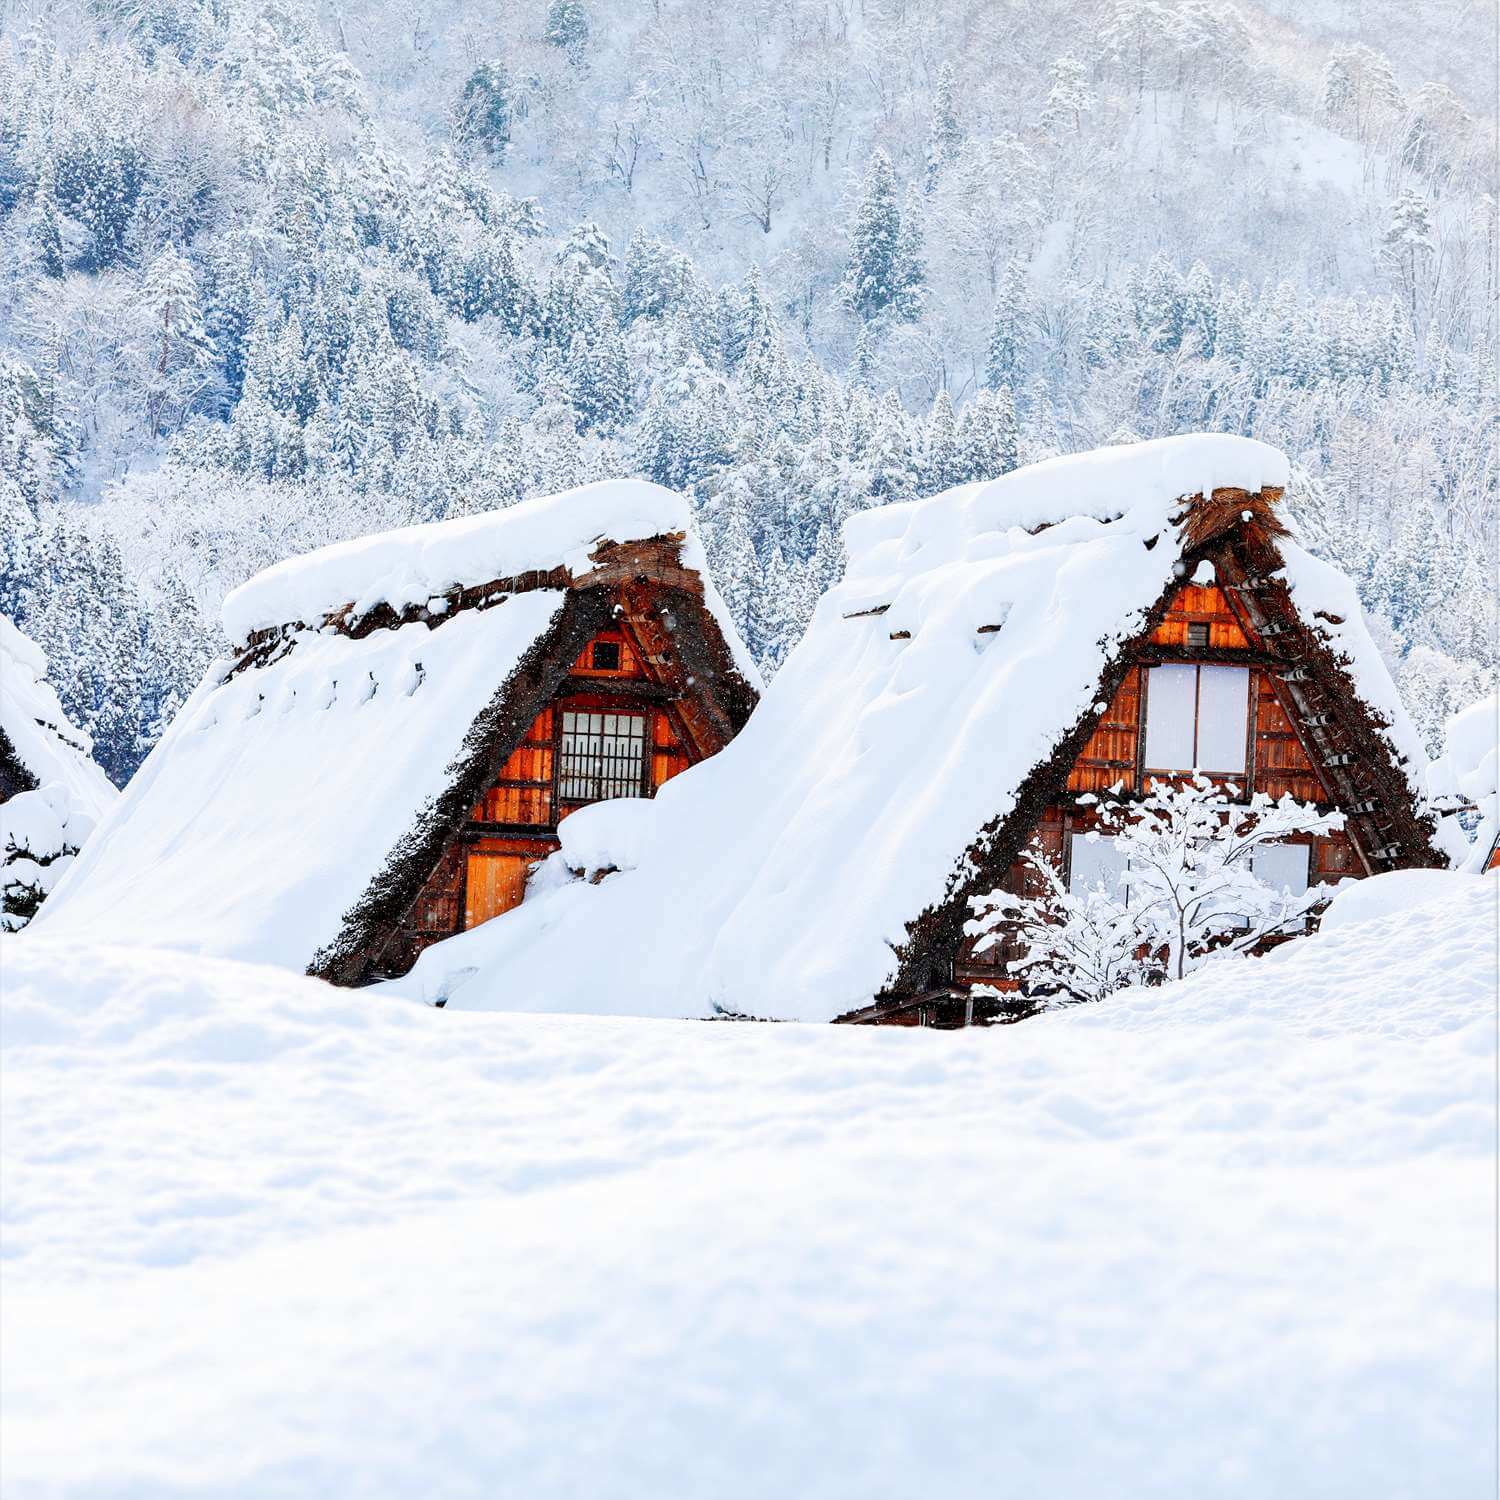 shirakawago village with the Snow falling day = Shutterstock 2